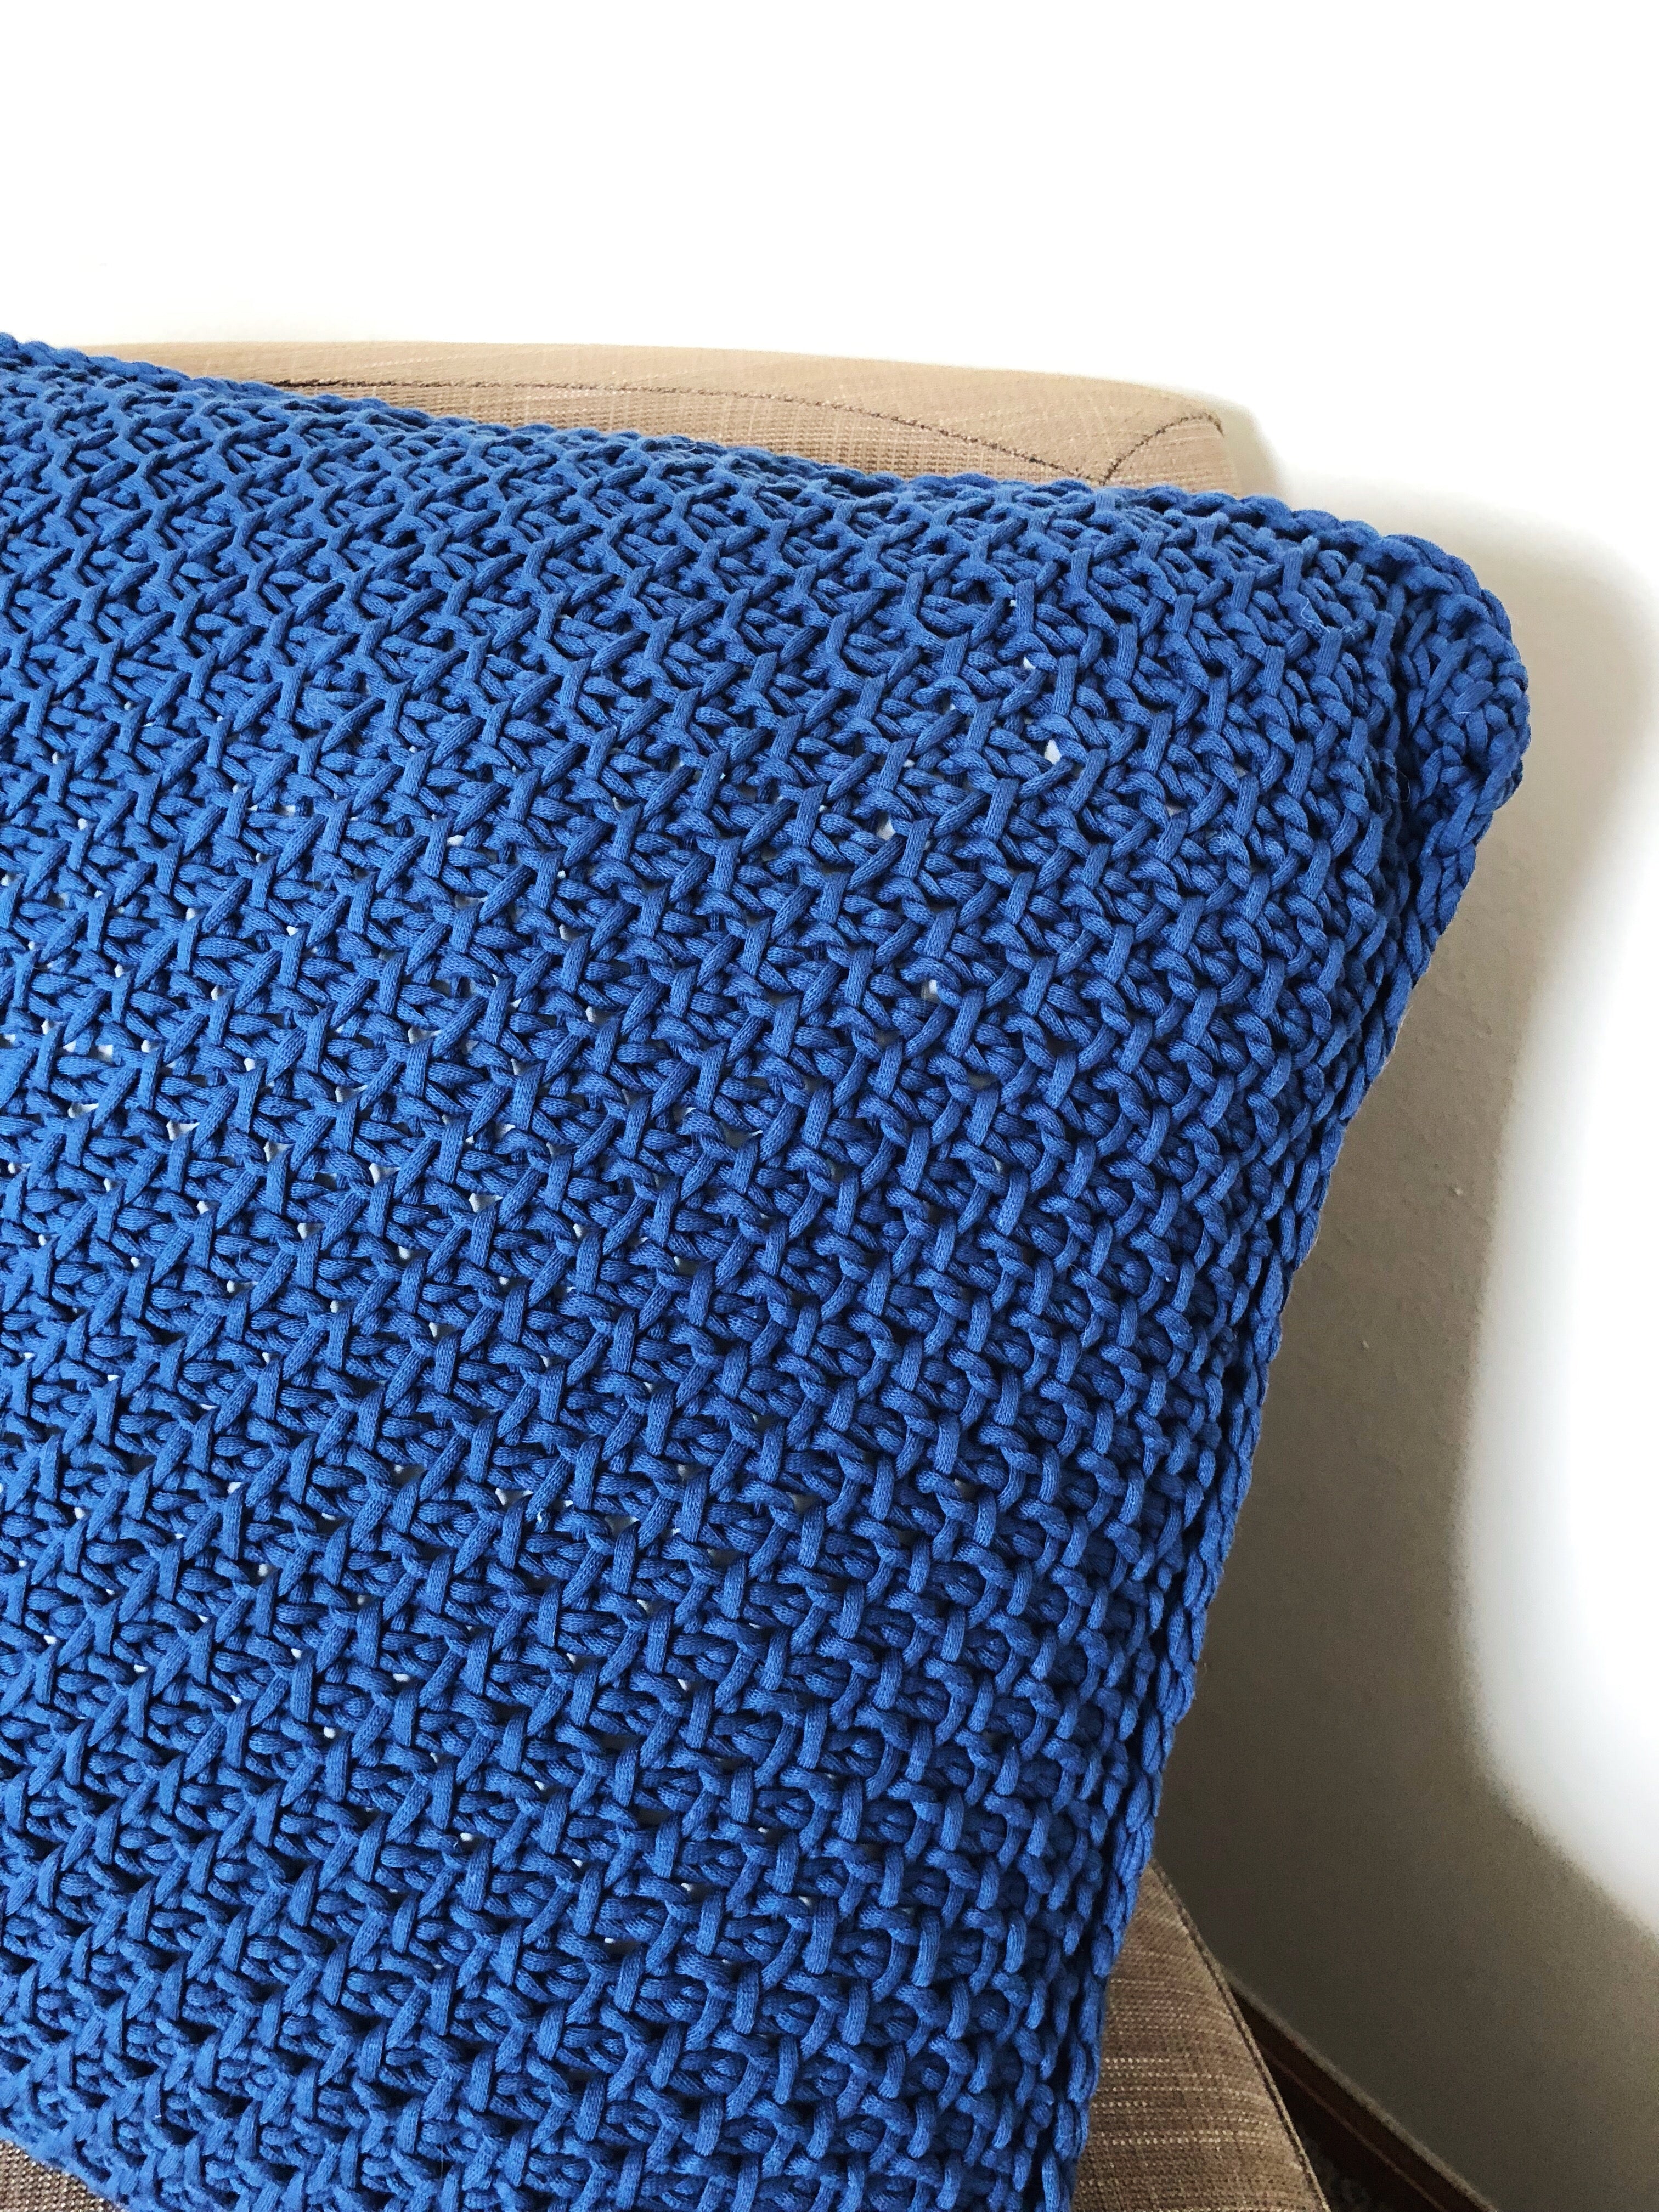 Log Cabin Throw Pillow // Tunisian Crochet PDF Pattern